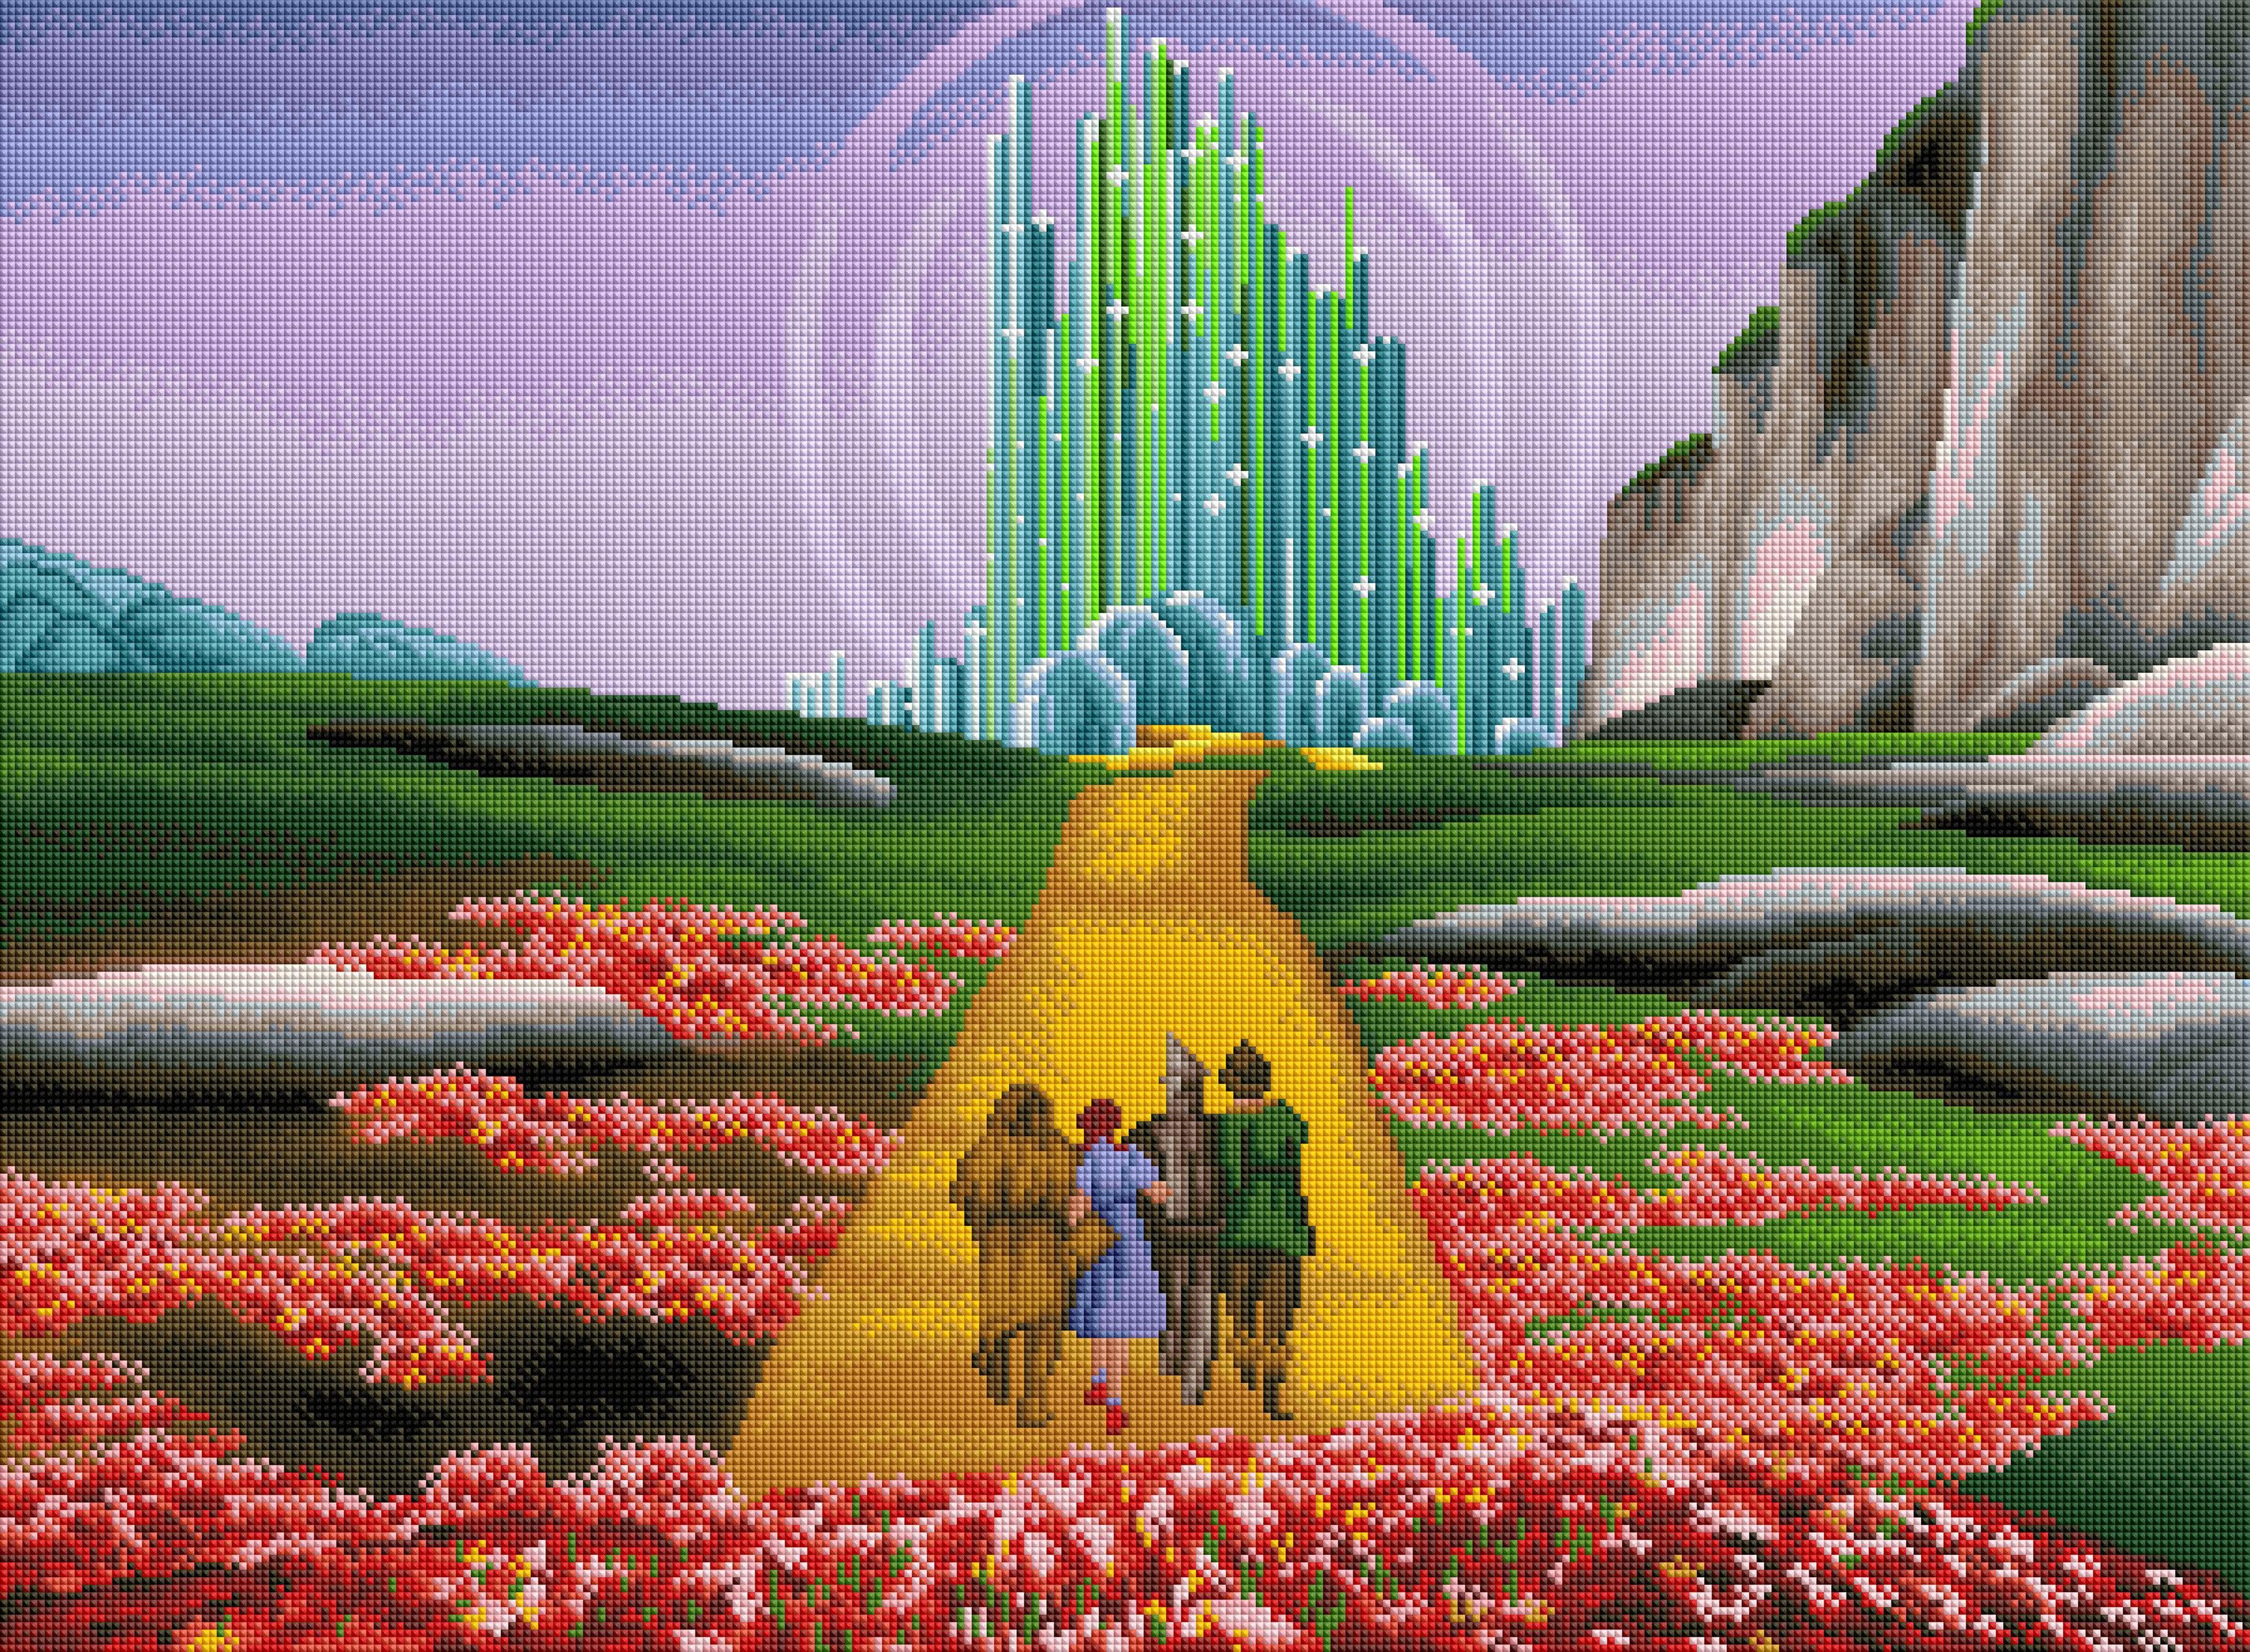 UNBOXING: Diamond Art Club Emerald City Wizard of Oz Diamond